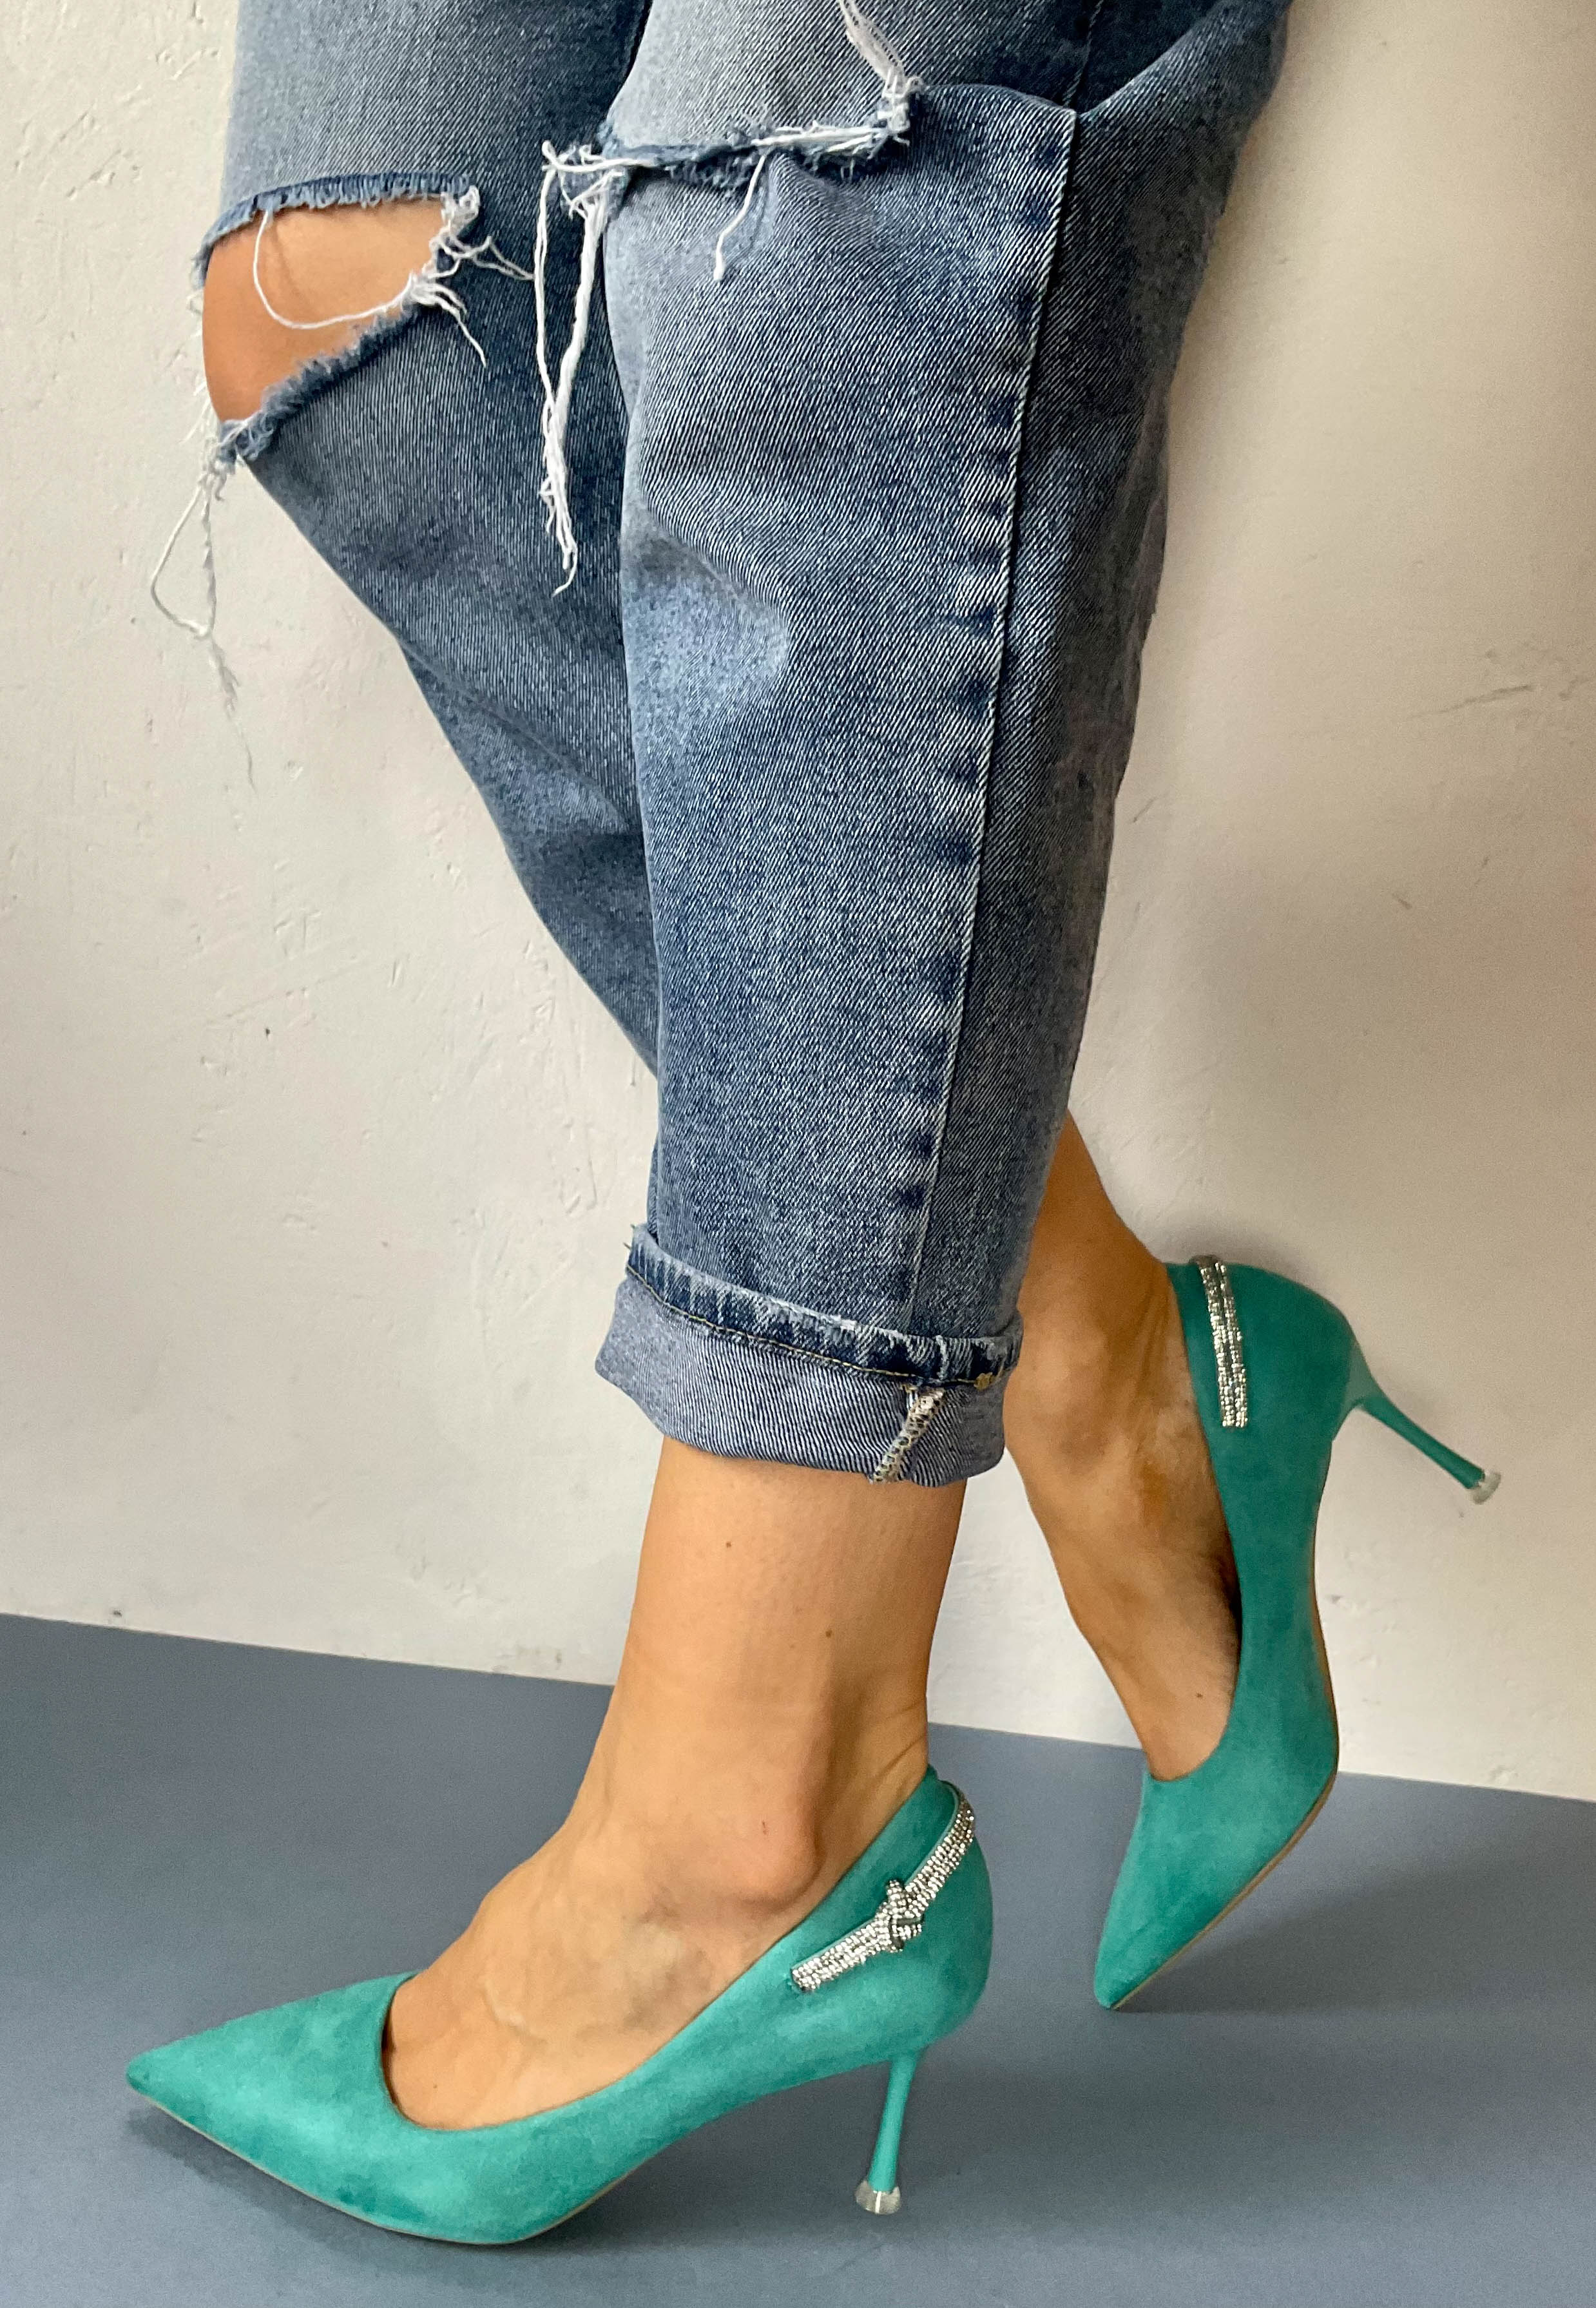 Green Patent High Heels | Olive Heel Shoes Women | Olive Green Heels | Stiletto  Pumps - Pumps - Aliexpress